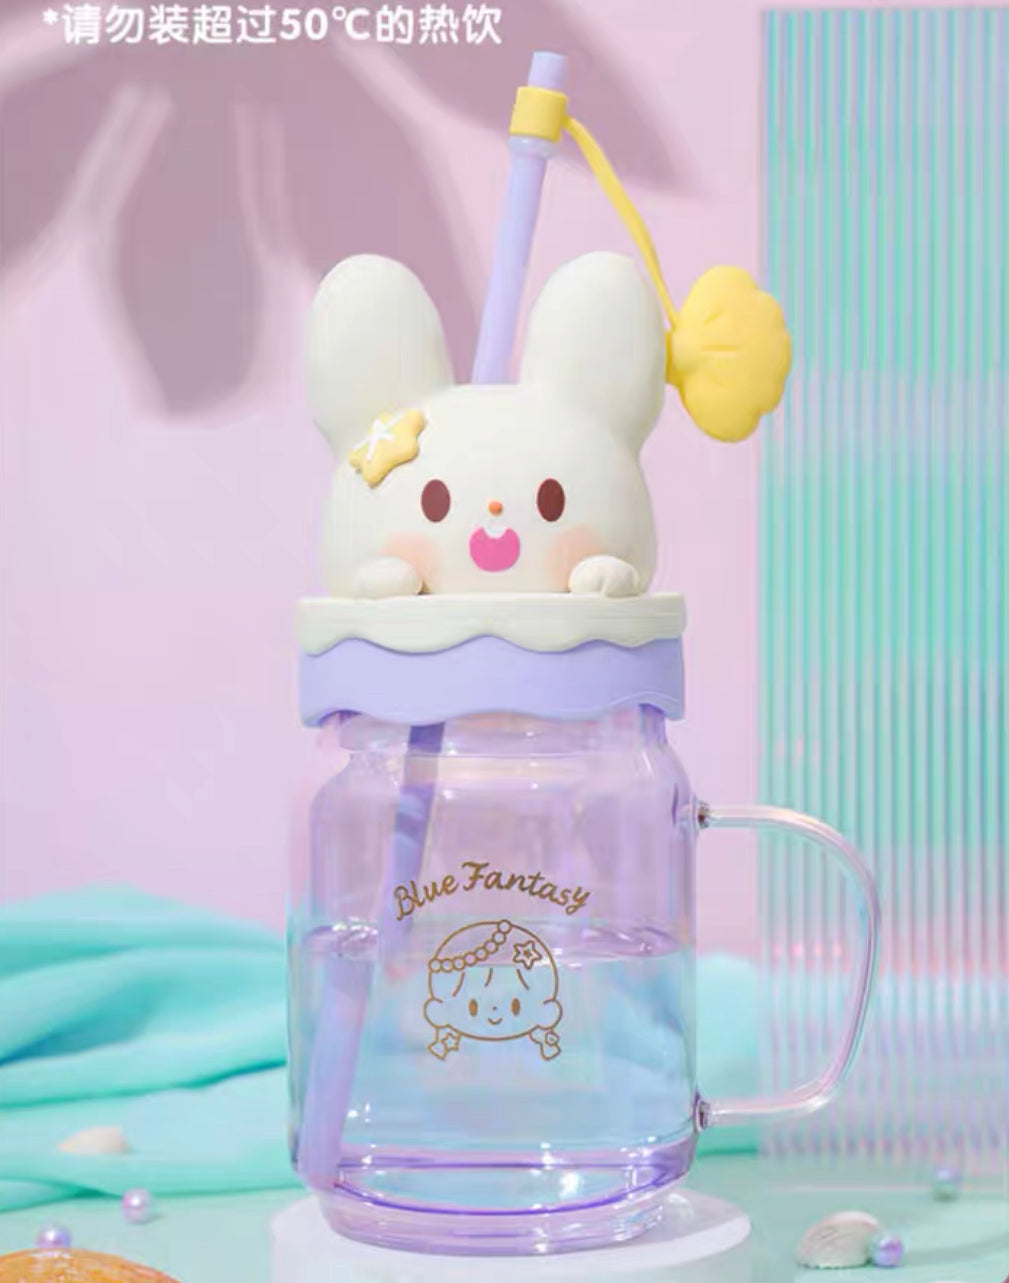 Molinta × M&G shop summer limited blue fantasy series starfish rabbit straw glass